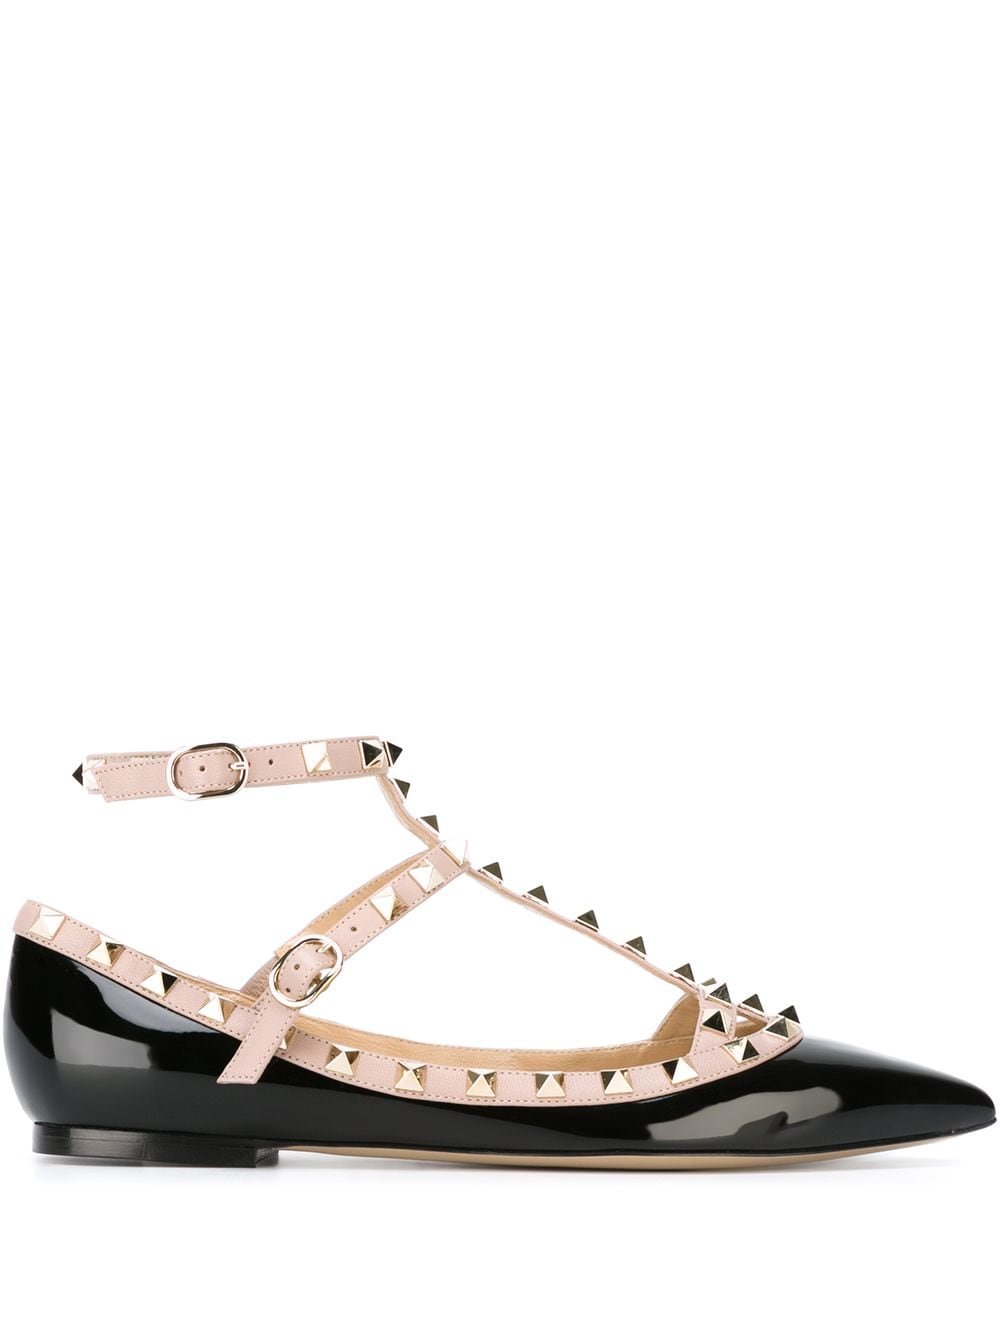 Shop Valentino Garavani Rockstud ballerina shoes with Express Delivery ...